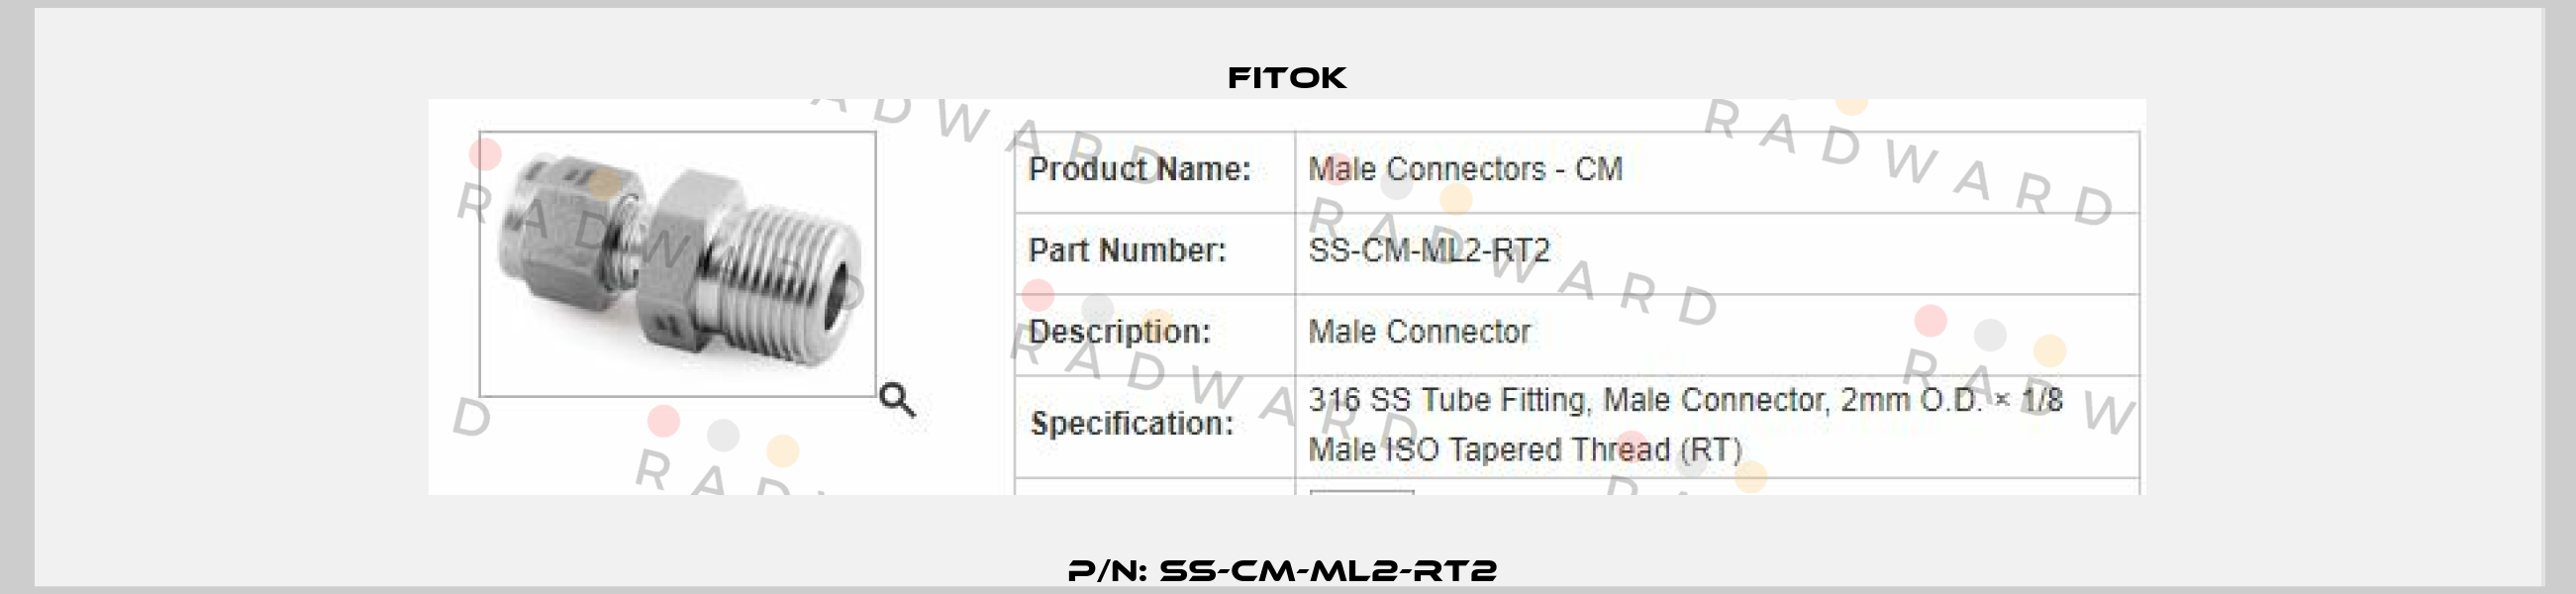 P/N: SS-CM-ML2-RT2  Fitok